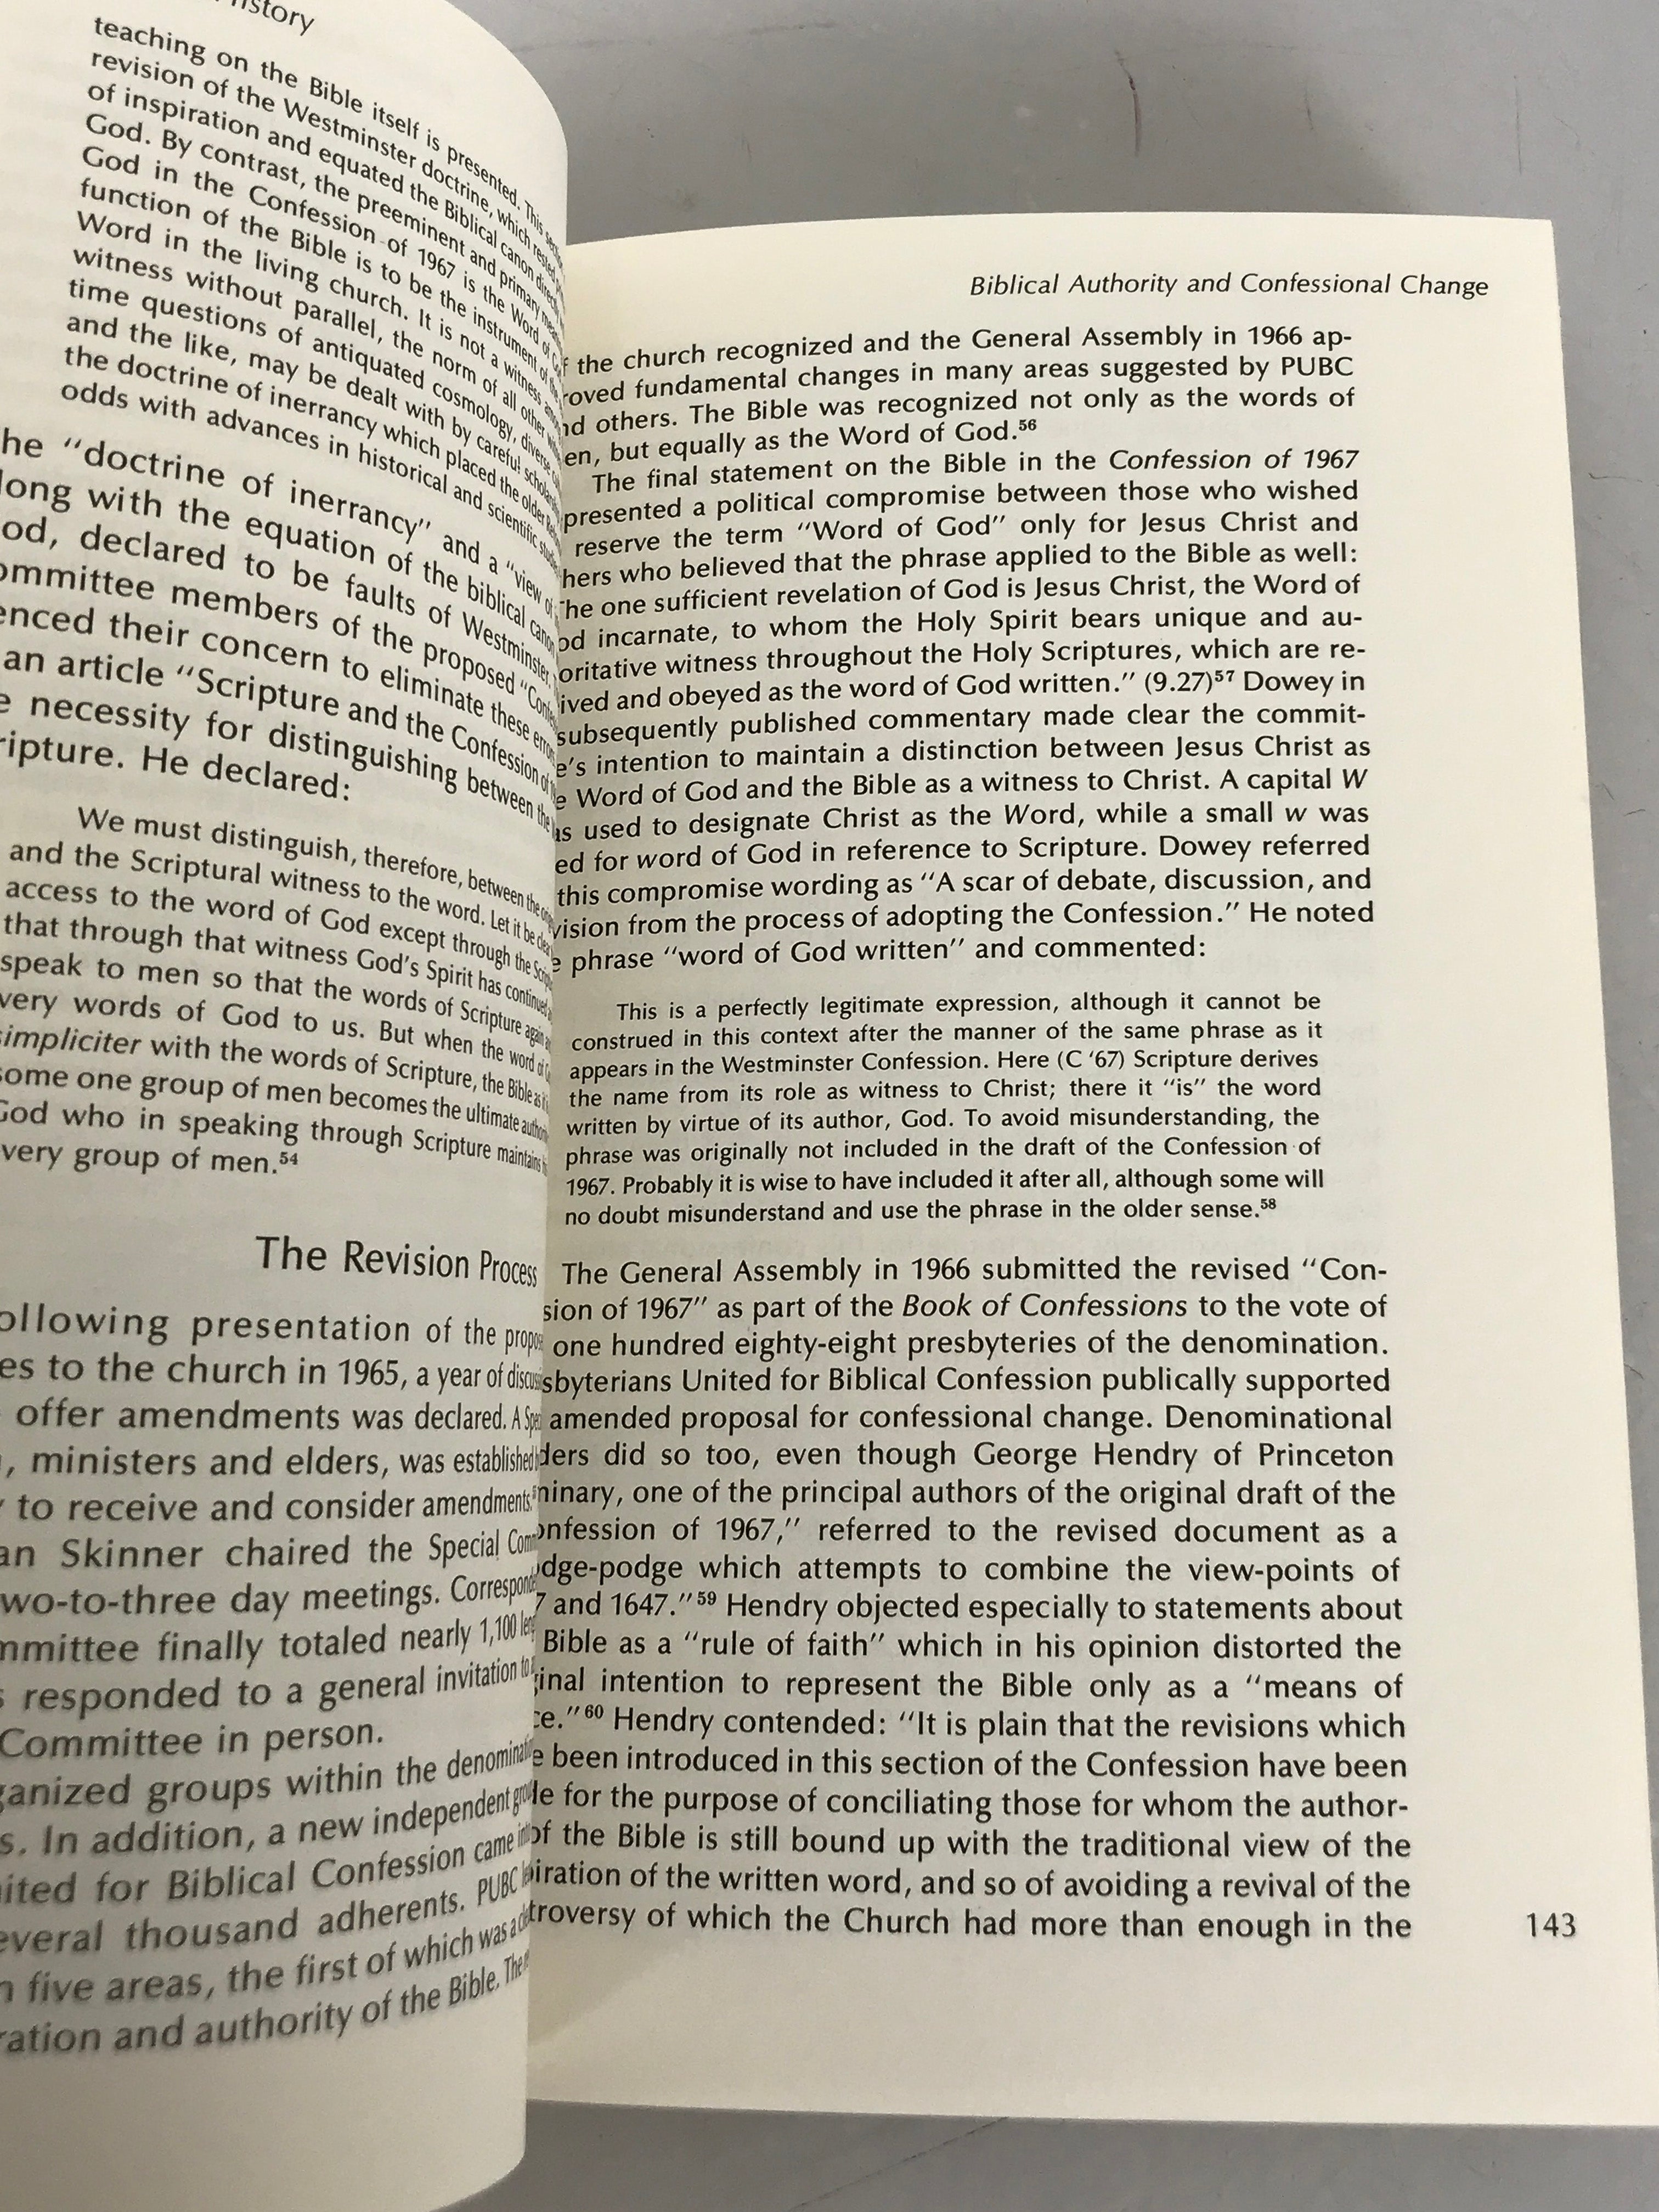 Presbyterians and Biblical Authority Journal of Presbyterian History Summer 1981 SC